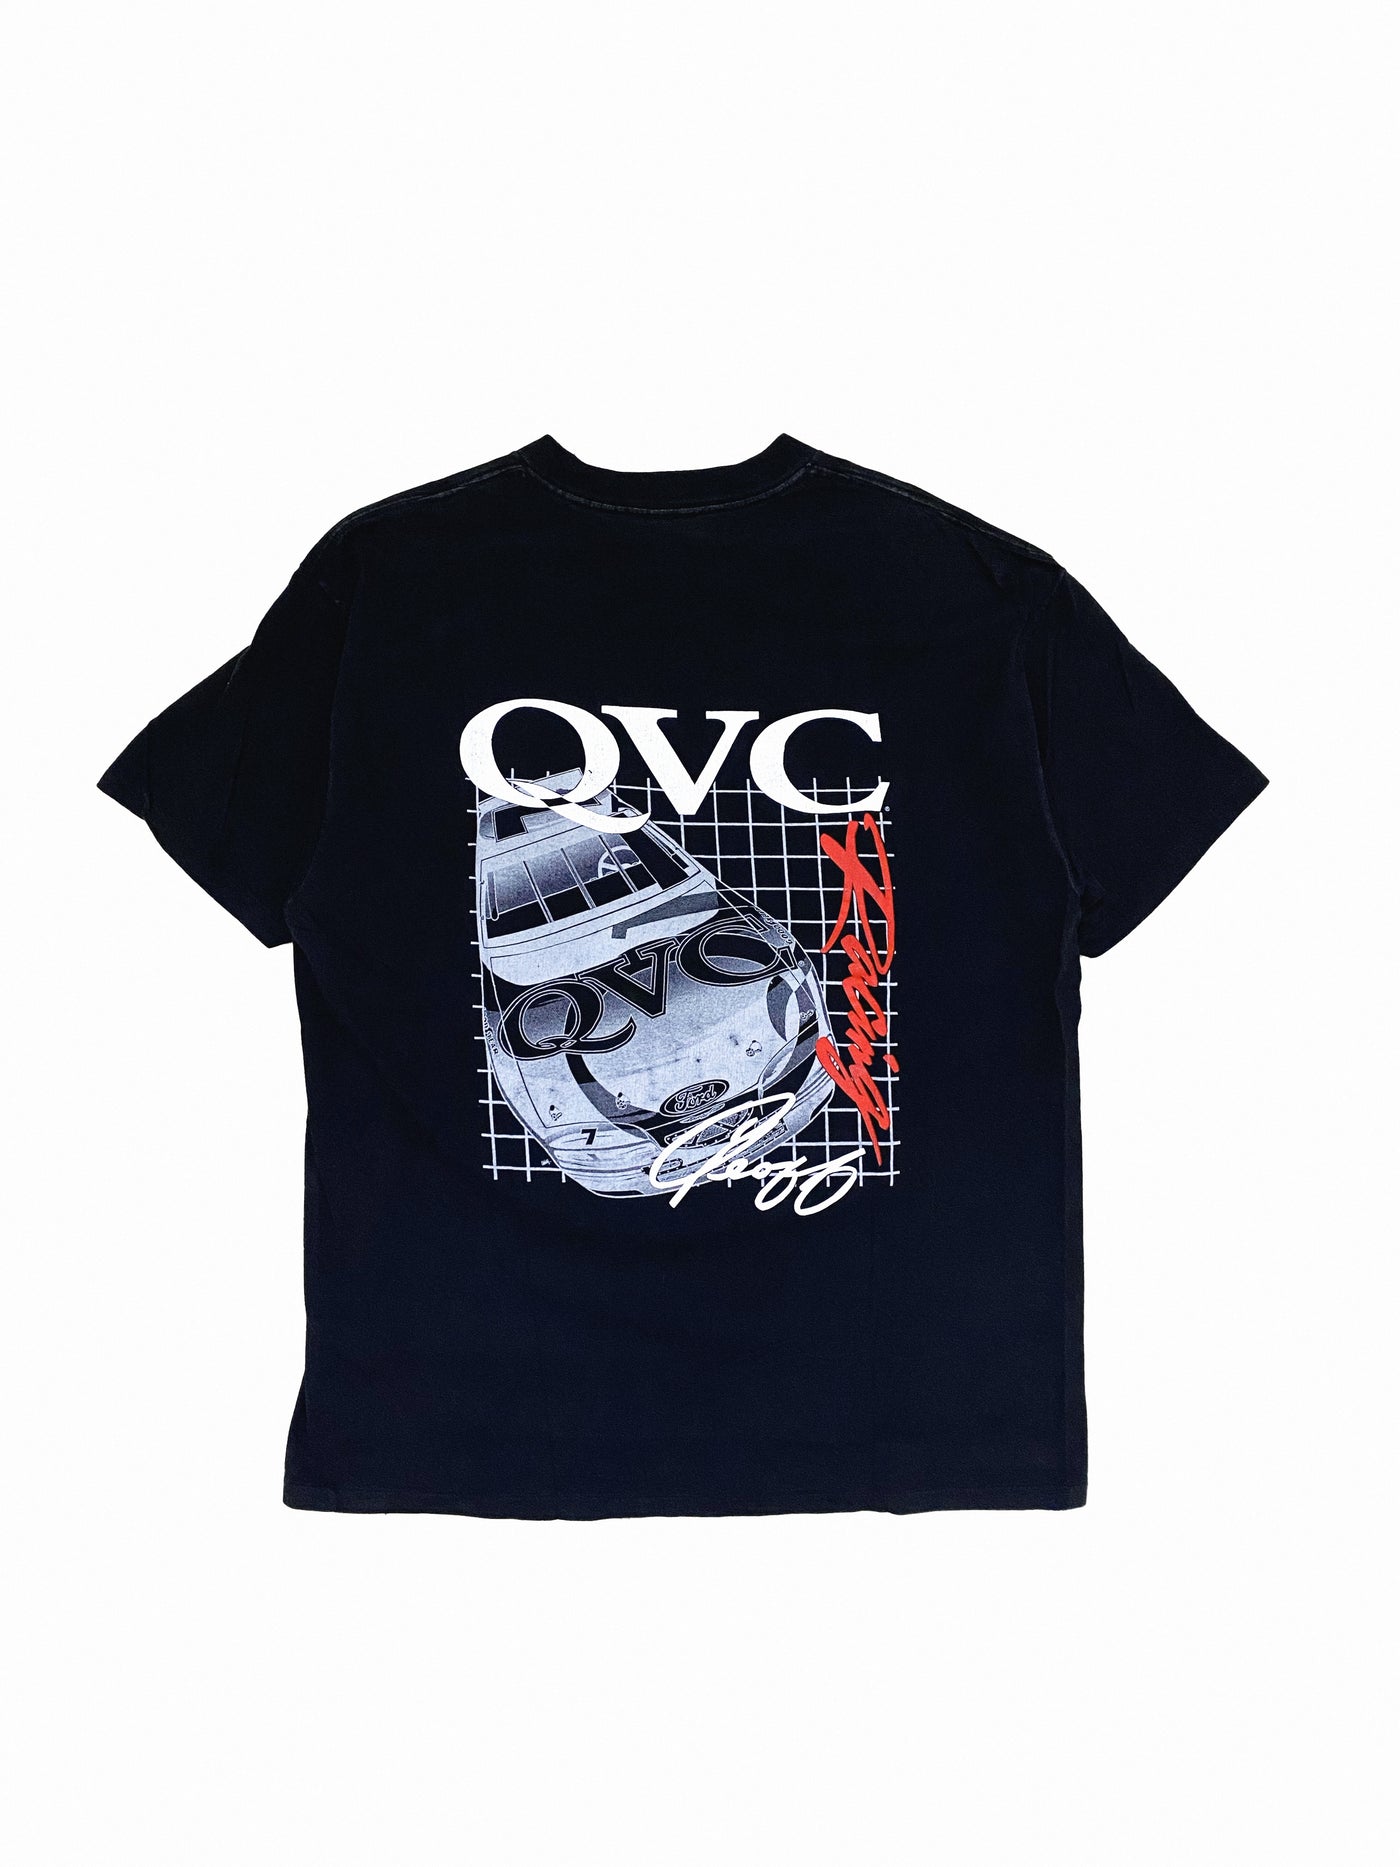 Vintage 1996 Geoff Bodine QVC Racing T-Shirt